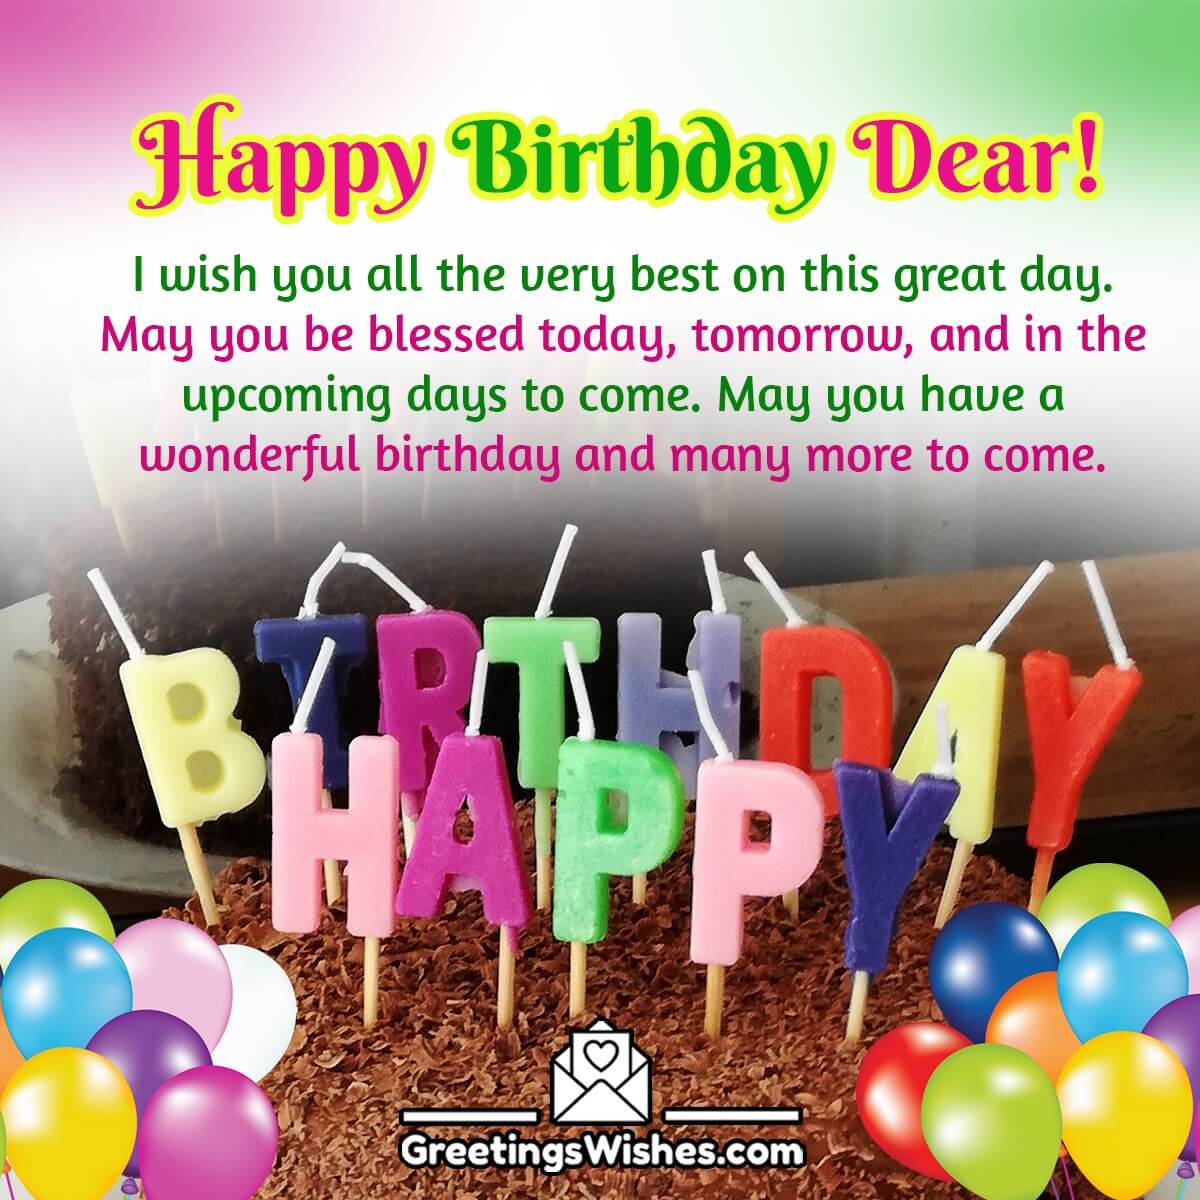 Happy Birthday Dear Wish